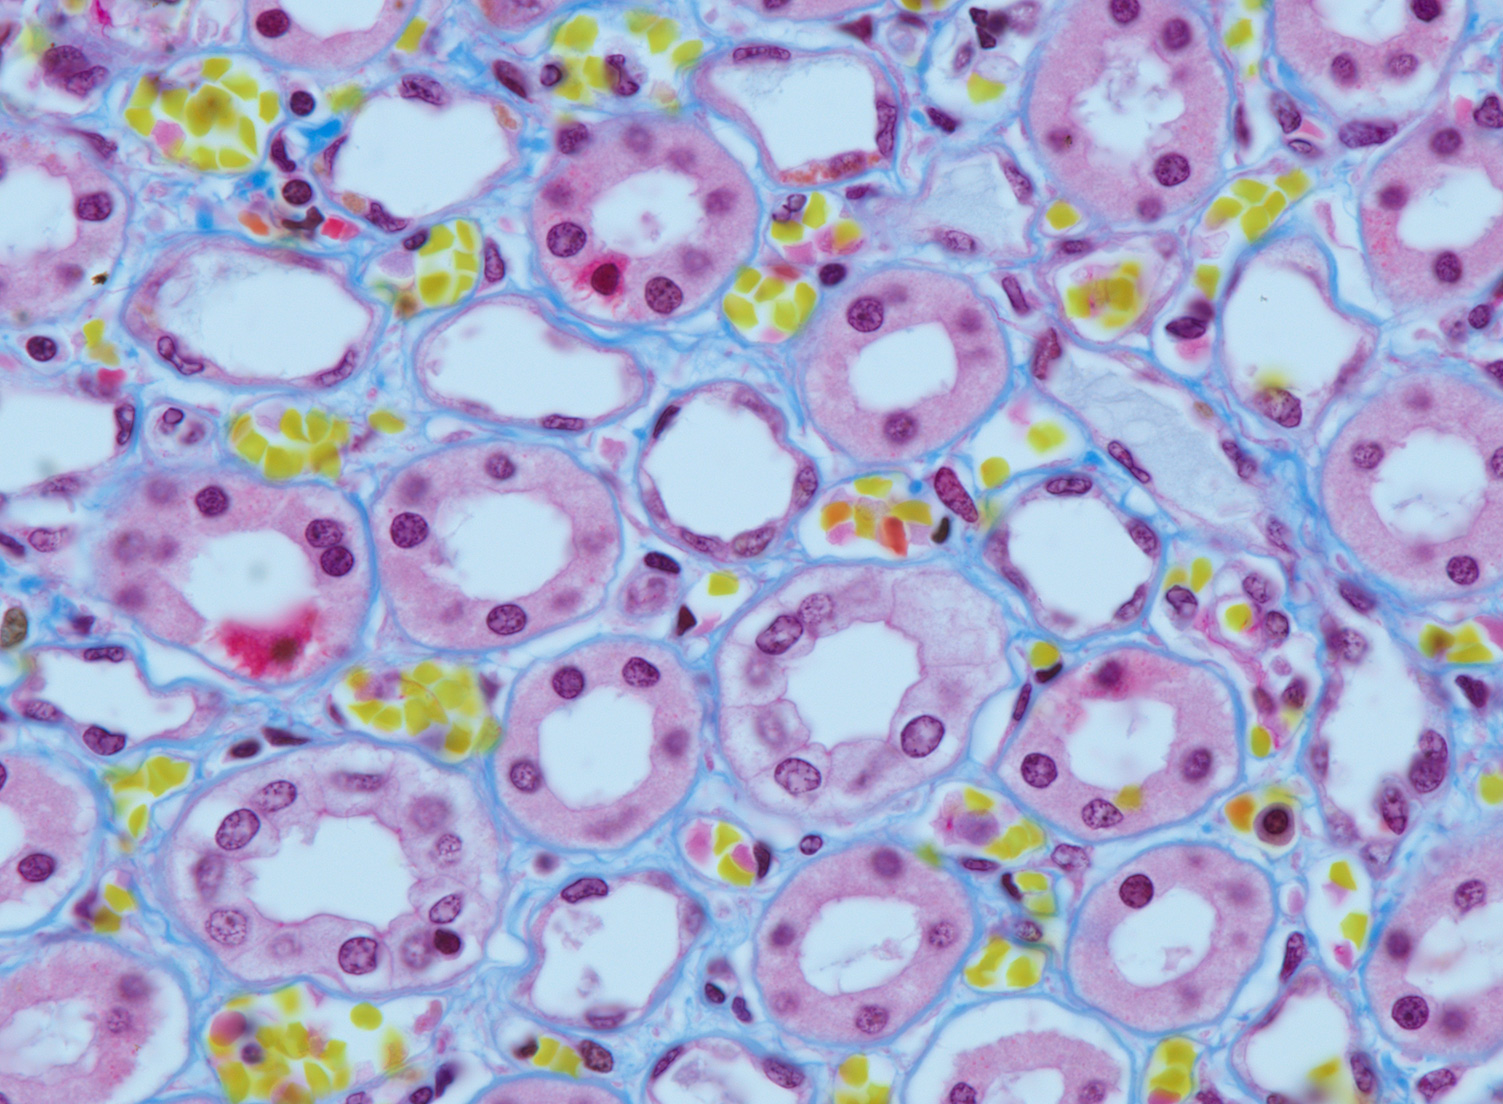 Human fibrin kidney. Trichrome staining. Objective: ZEISS Plan-Apochromat 63x/1.4 oil 